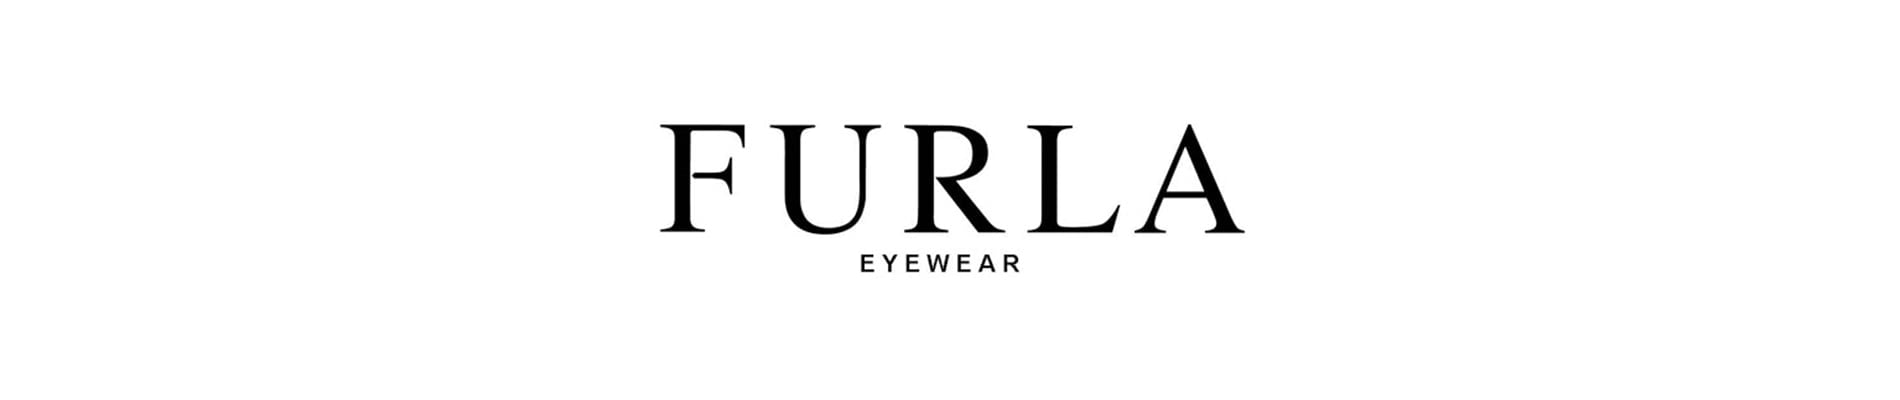 Furla eyewear designer frames header